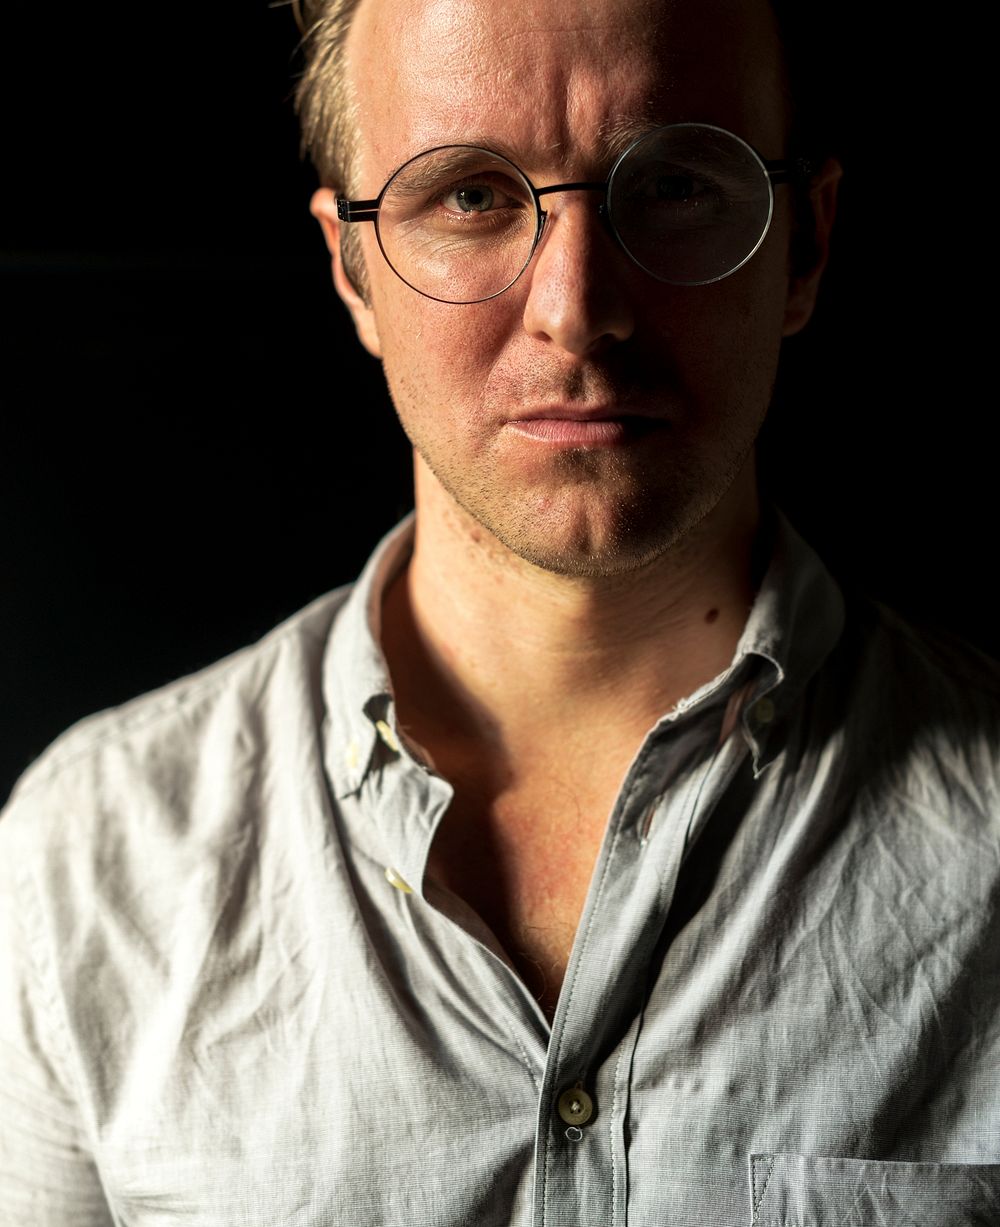 Closeup portrait of a guy wearing glasses